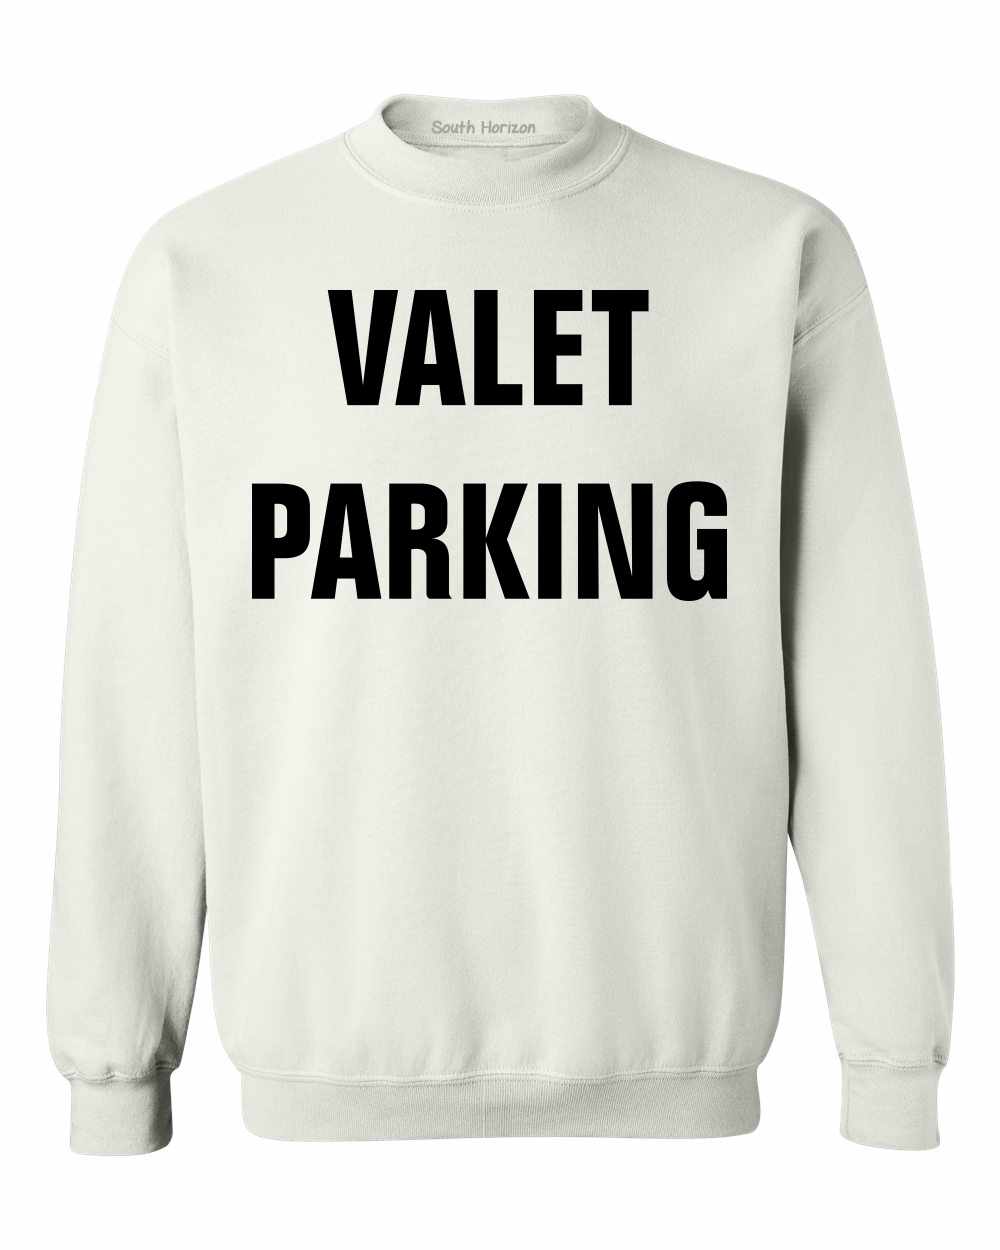 VALET PARKING on SweatShirt (#208-11)